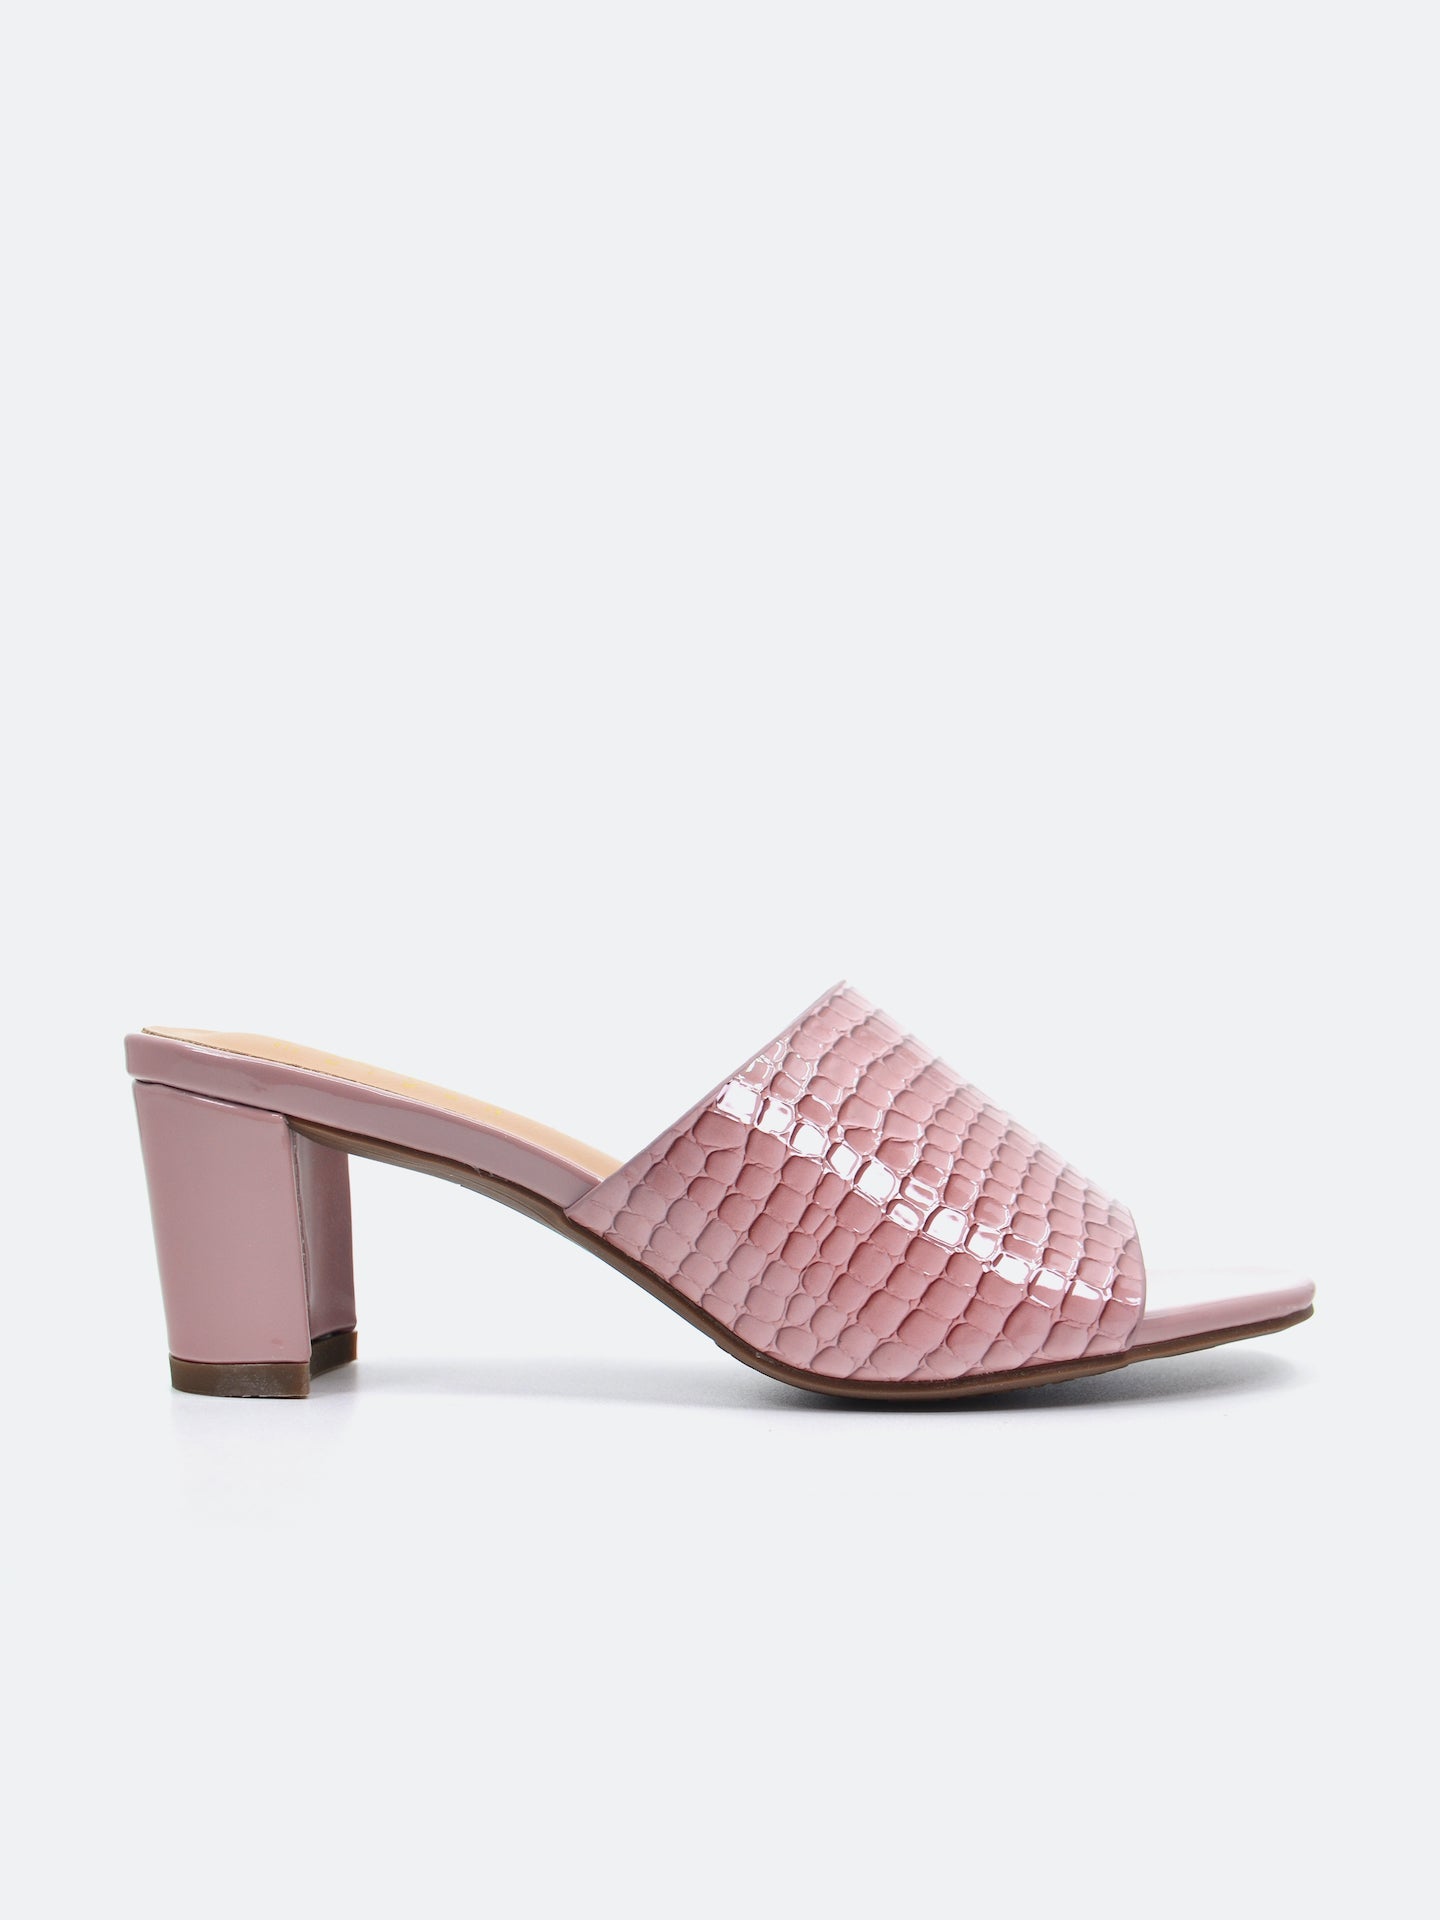 Michelle Morgan 914RJ191 Women's Heeled Sandals #color_Pink